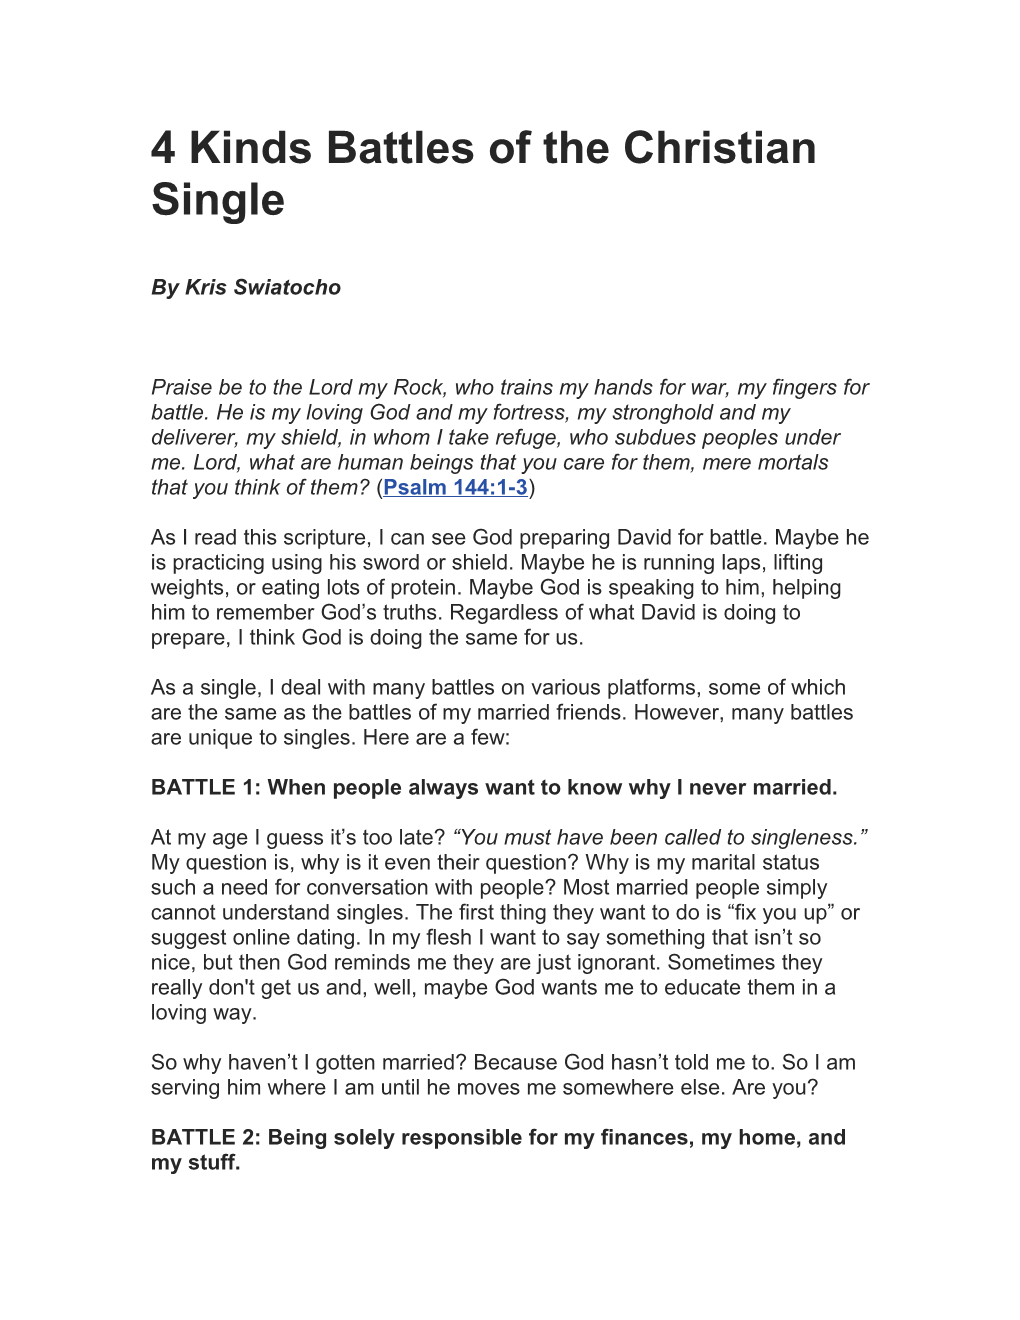 4 Kinds Battles of the Christian Single